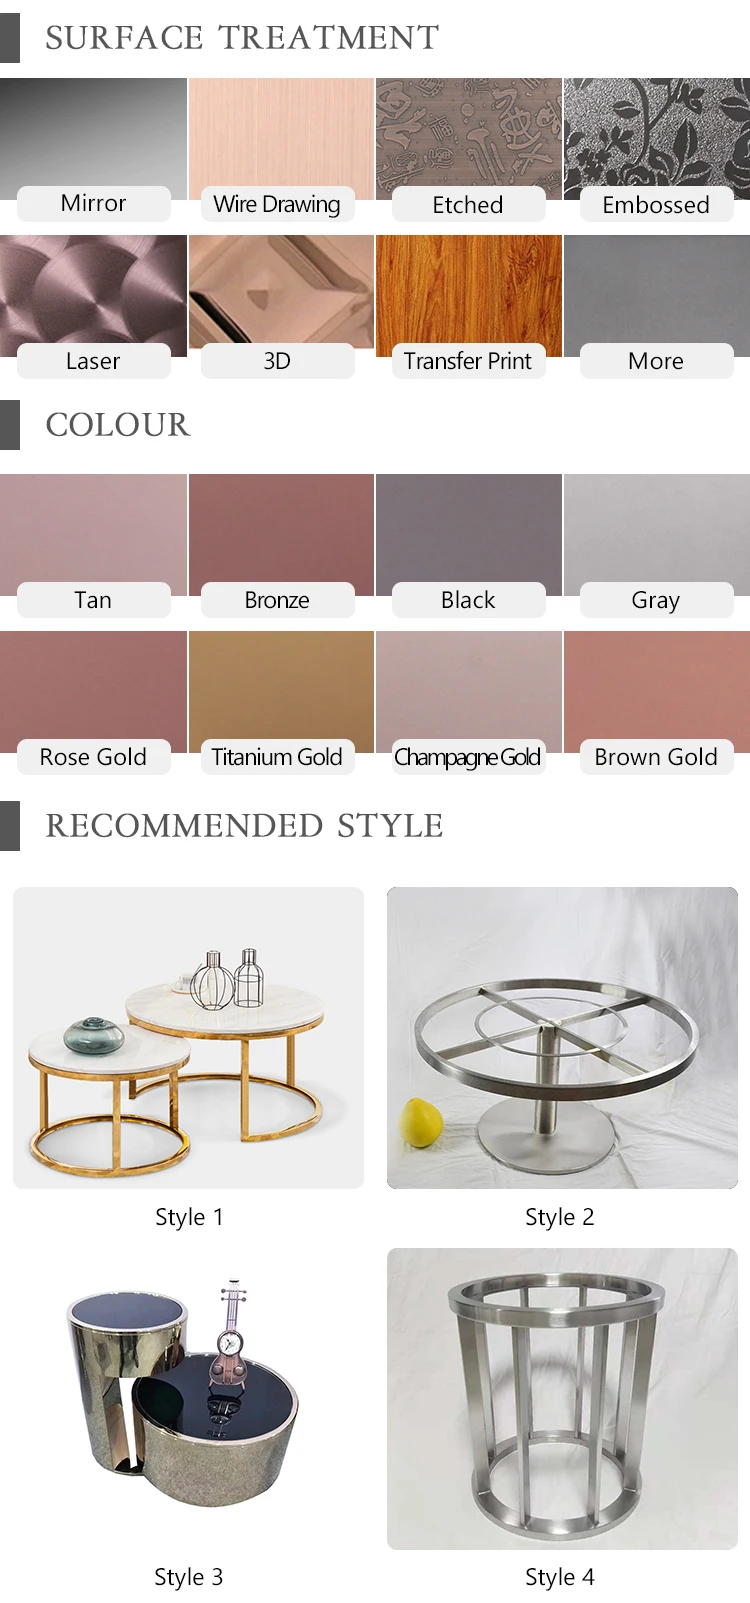 Custom New Design Stainless Steel Marble Top Coffee Table Modern Living Room Metal Furniture Table Base